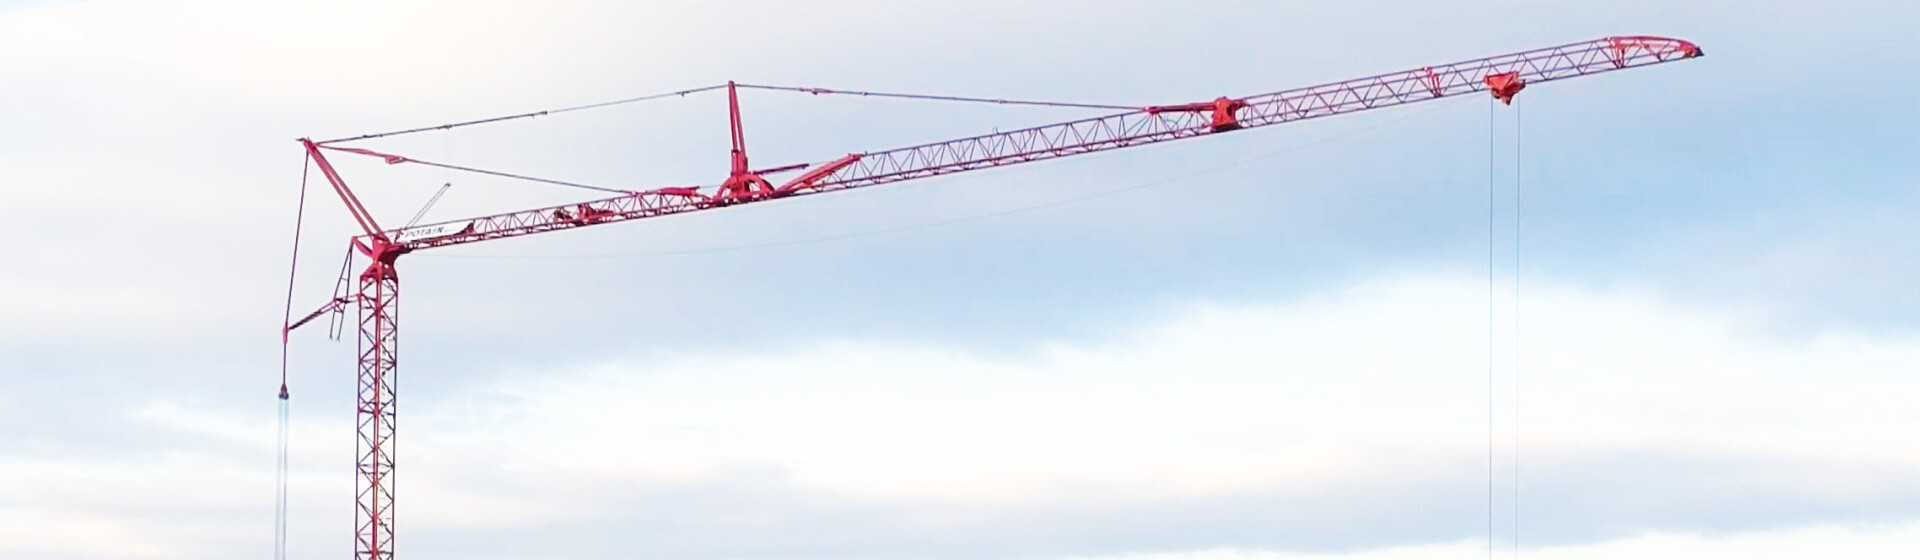 Cedar-Run-Construction-replaces-fleet-of-telehandlers-with-one-Potain-self-erecting-crane-1.jpg